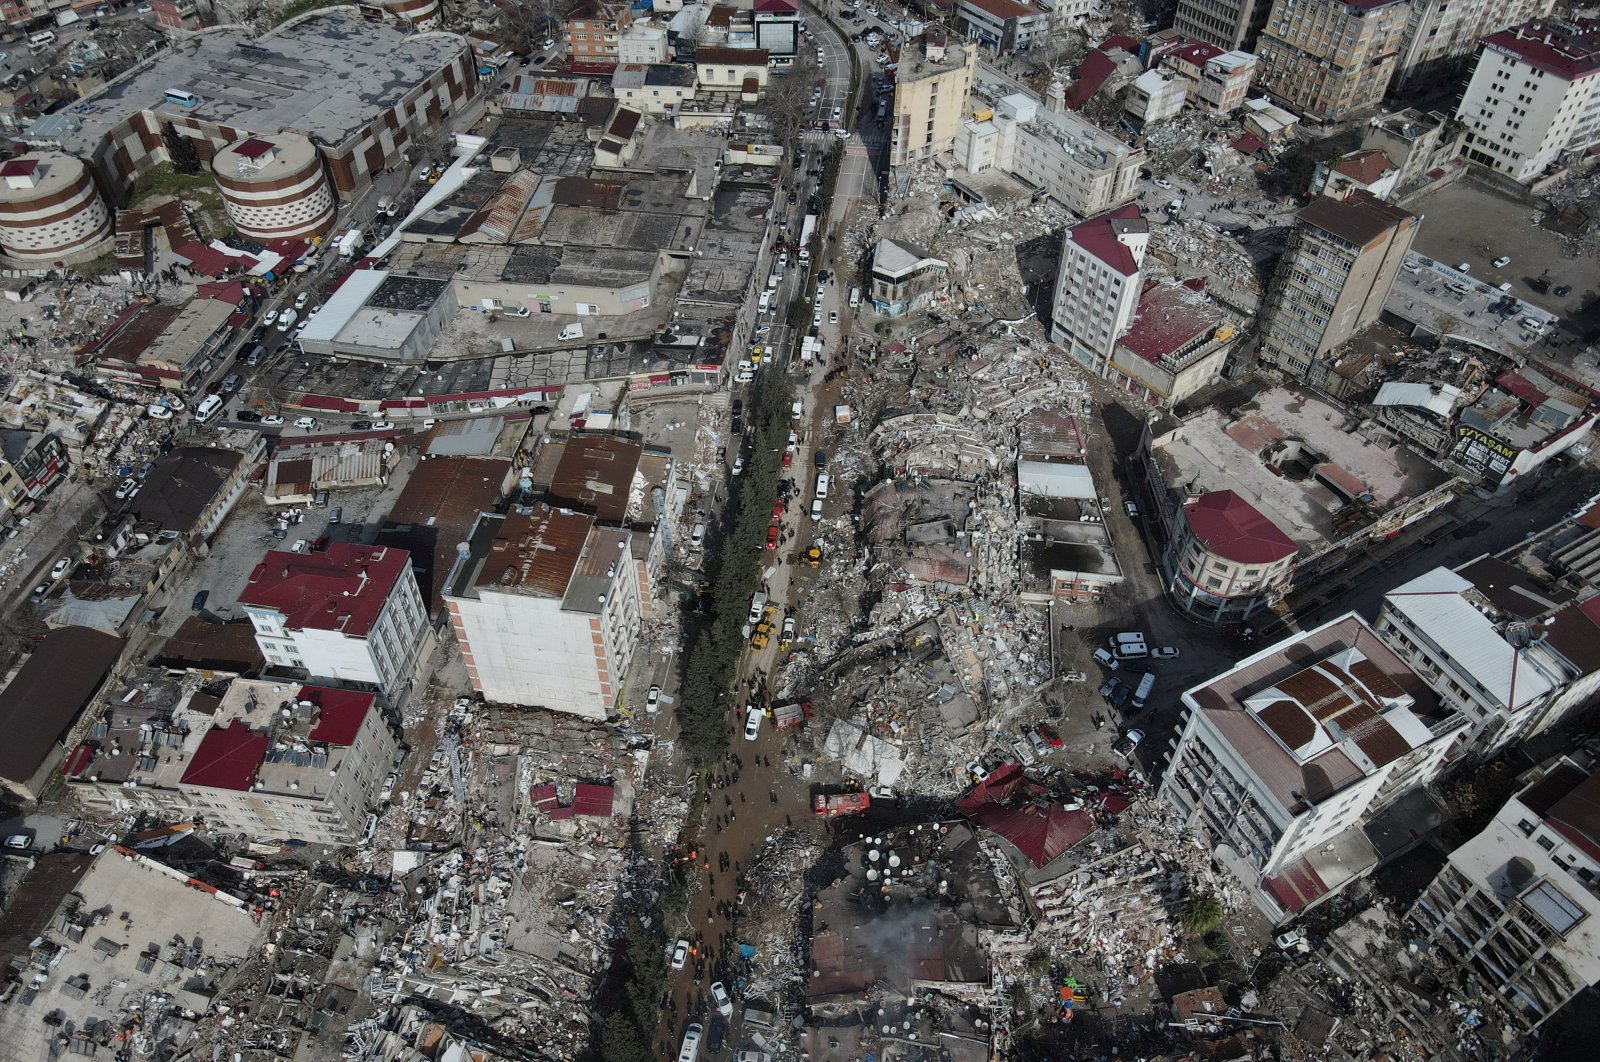 An aerial view shows damaged and collapsed buildings following an earthquake, in Kahramanmaraş, Türkiye, Feb. 7, 2023. (Reuters Photo)